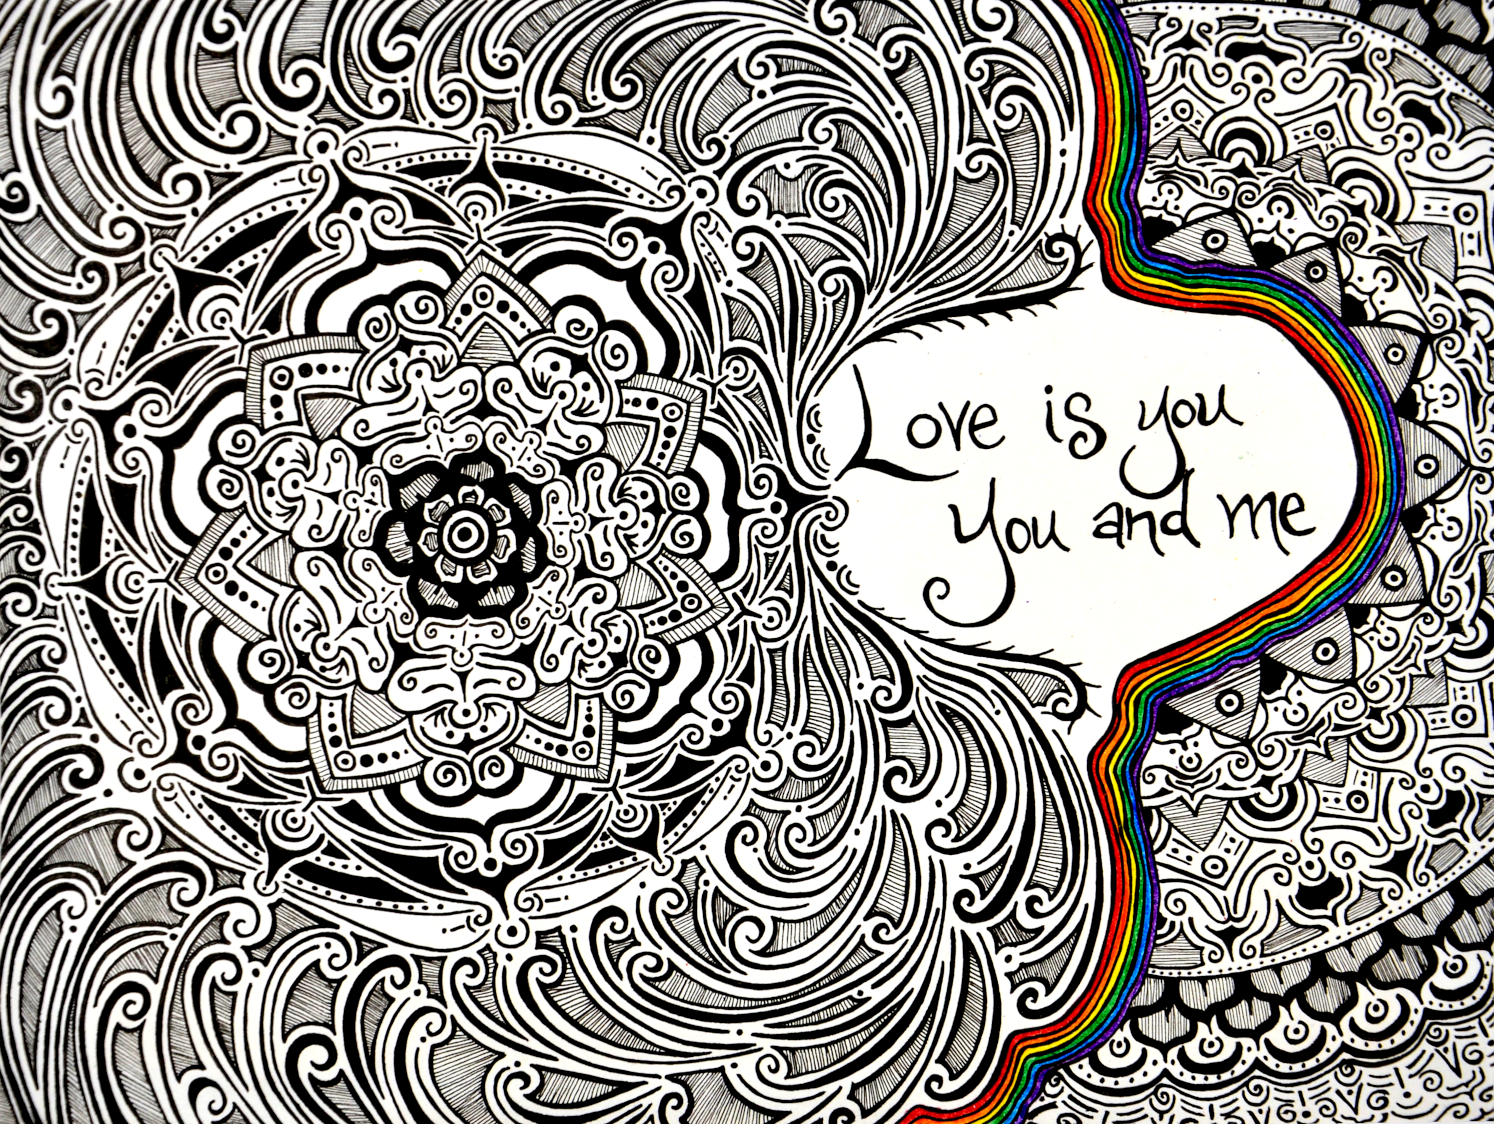 Love Is You flower drawing, by Tara Marolf